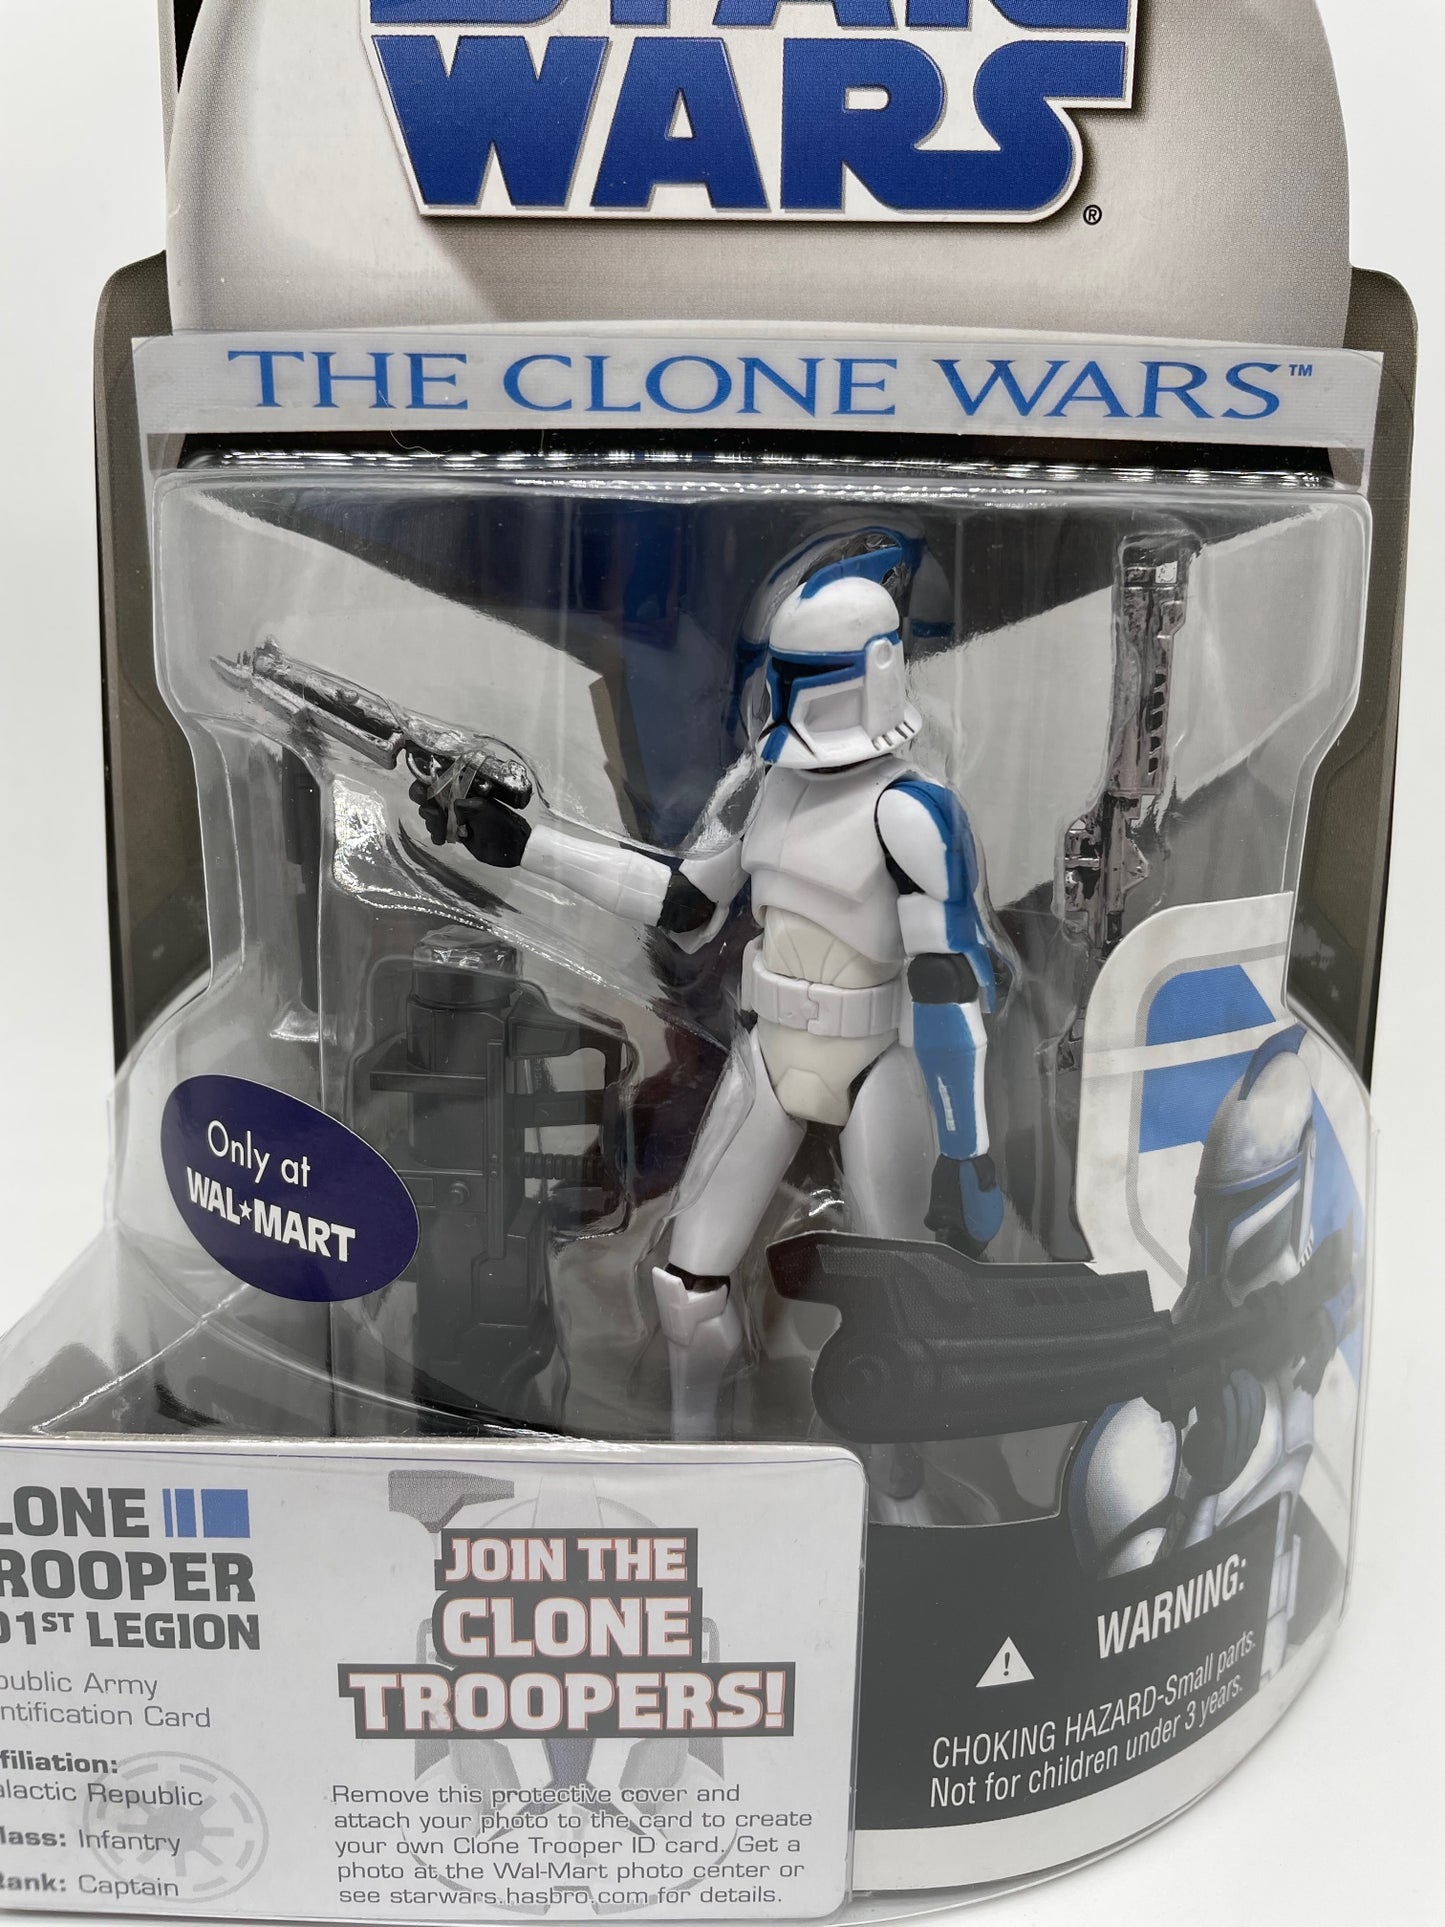 Clone Wars 501st Legion Clone Trooper Figure, Hasbro 2008